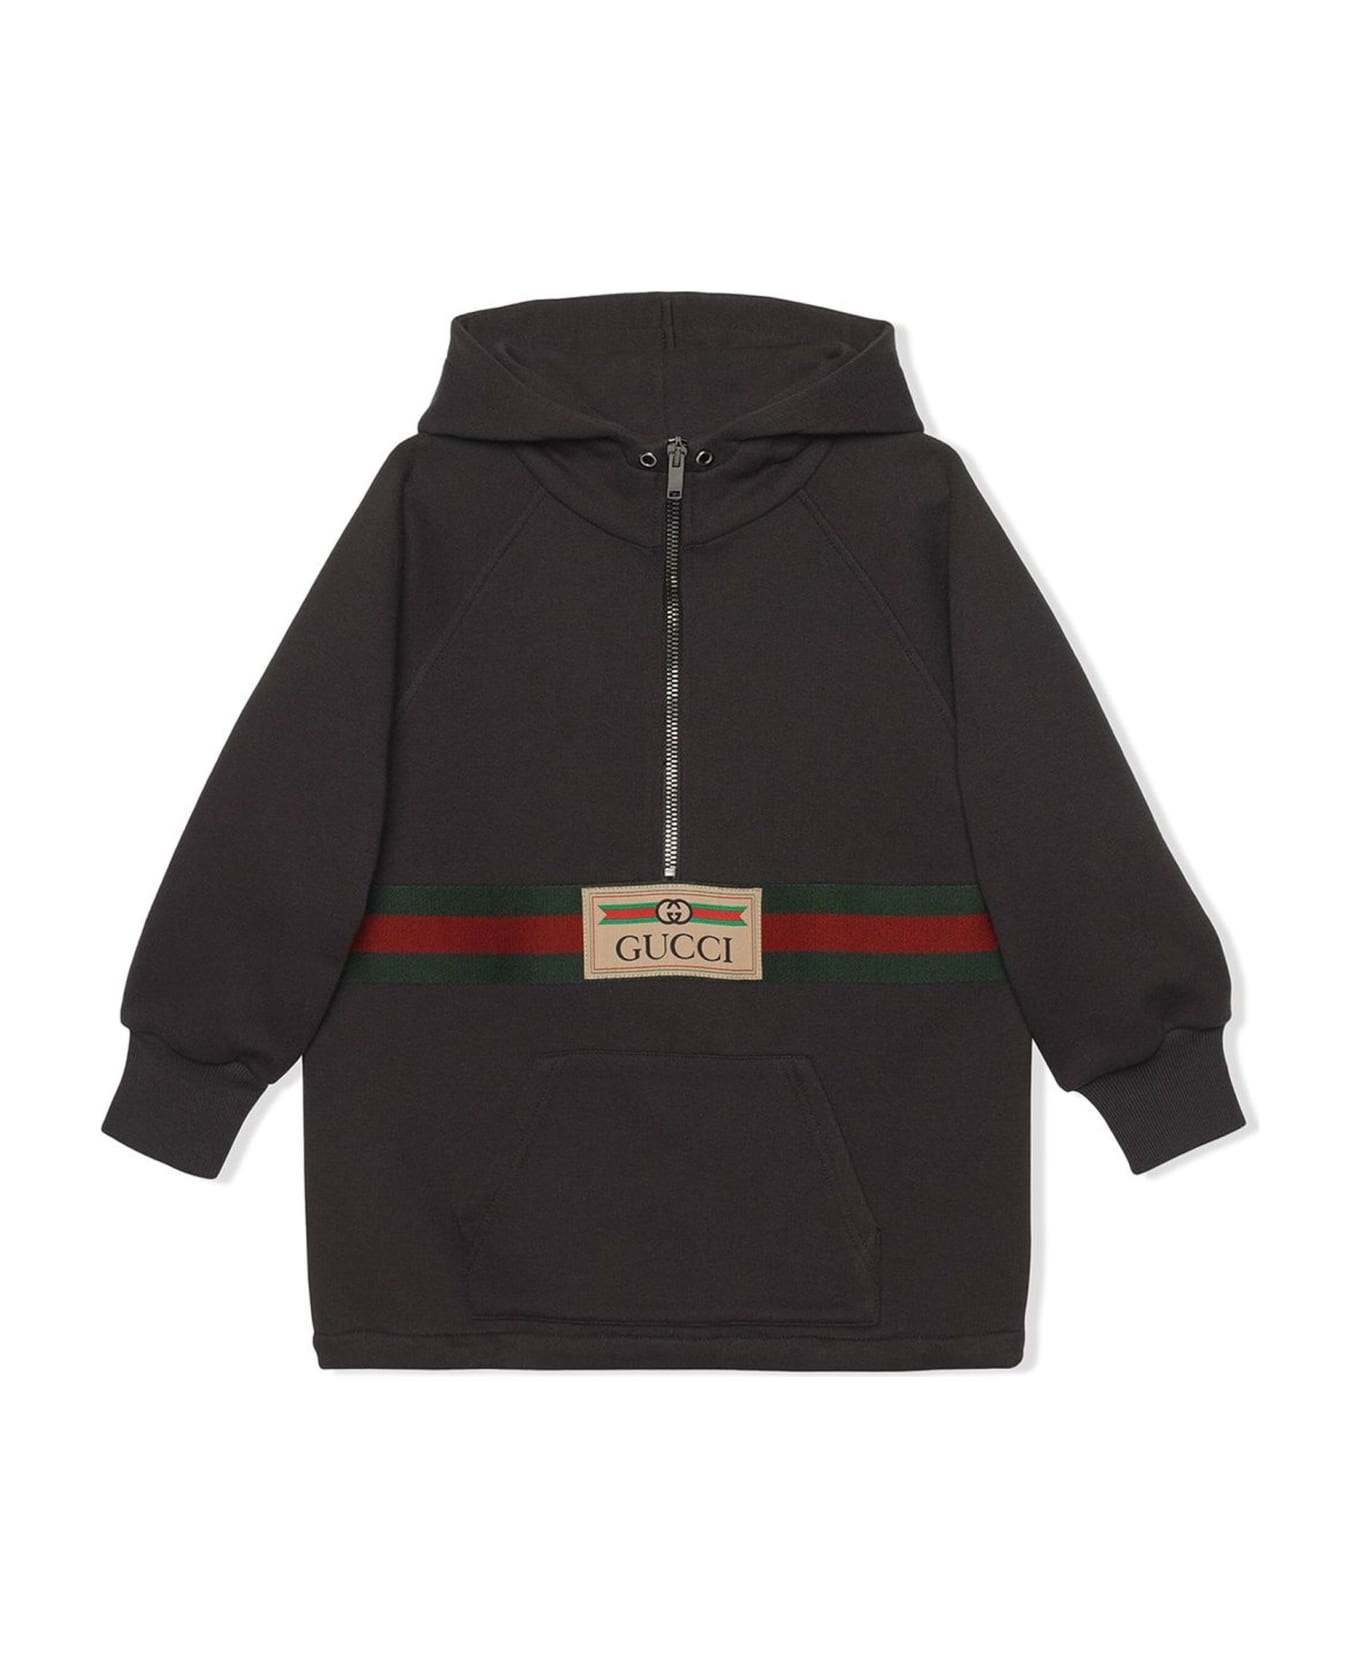 Gucci Dark Grey Felted Cotton Jersey Jacket - Grigio